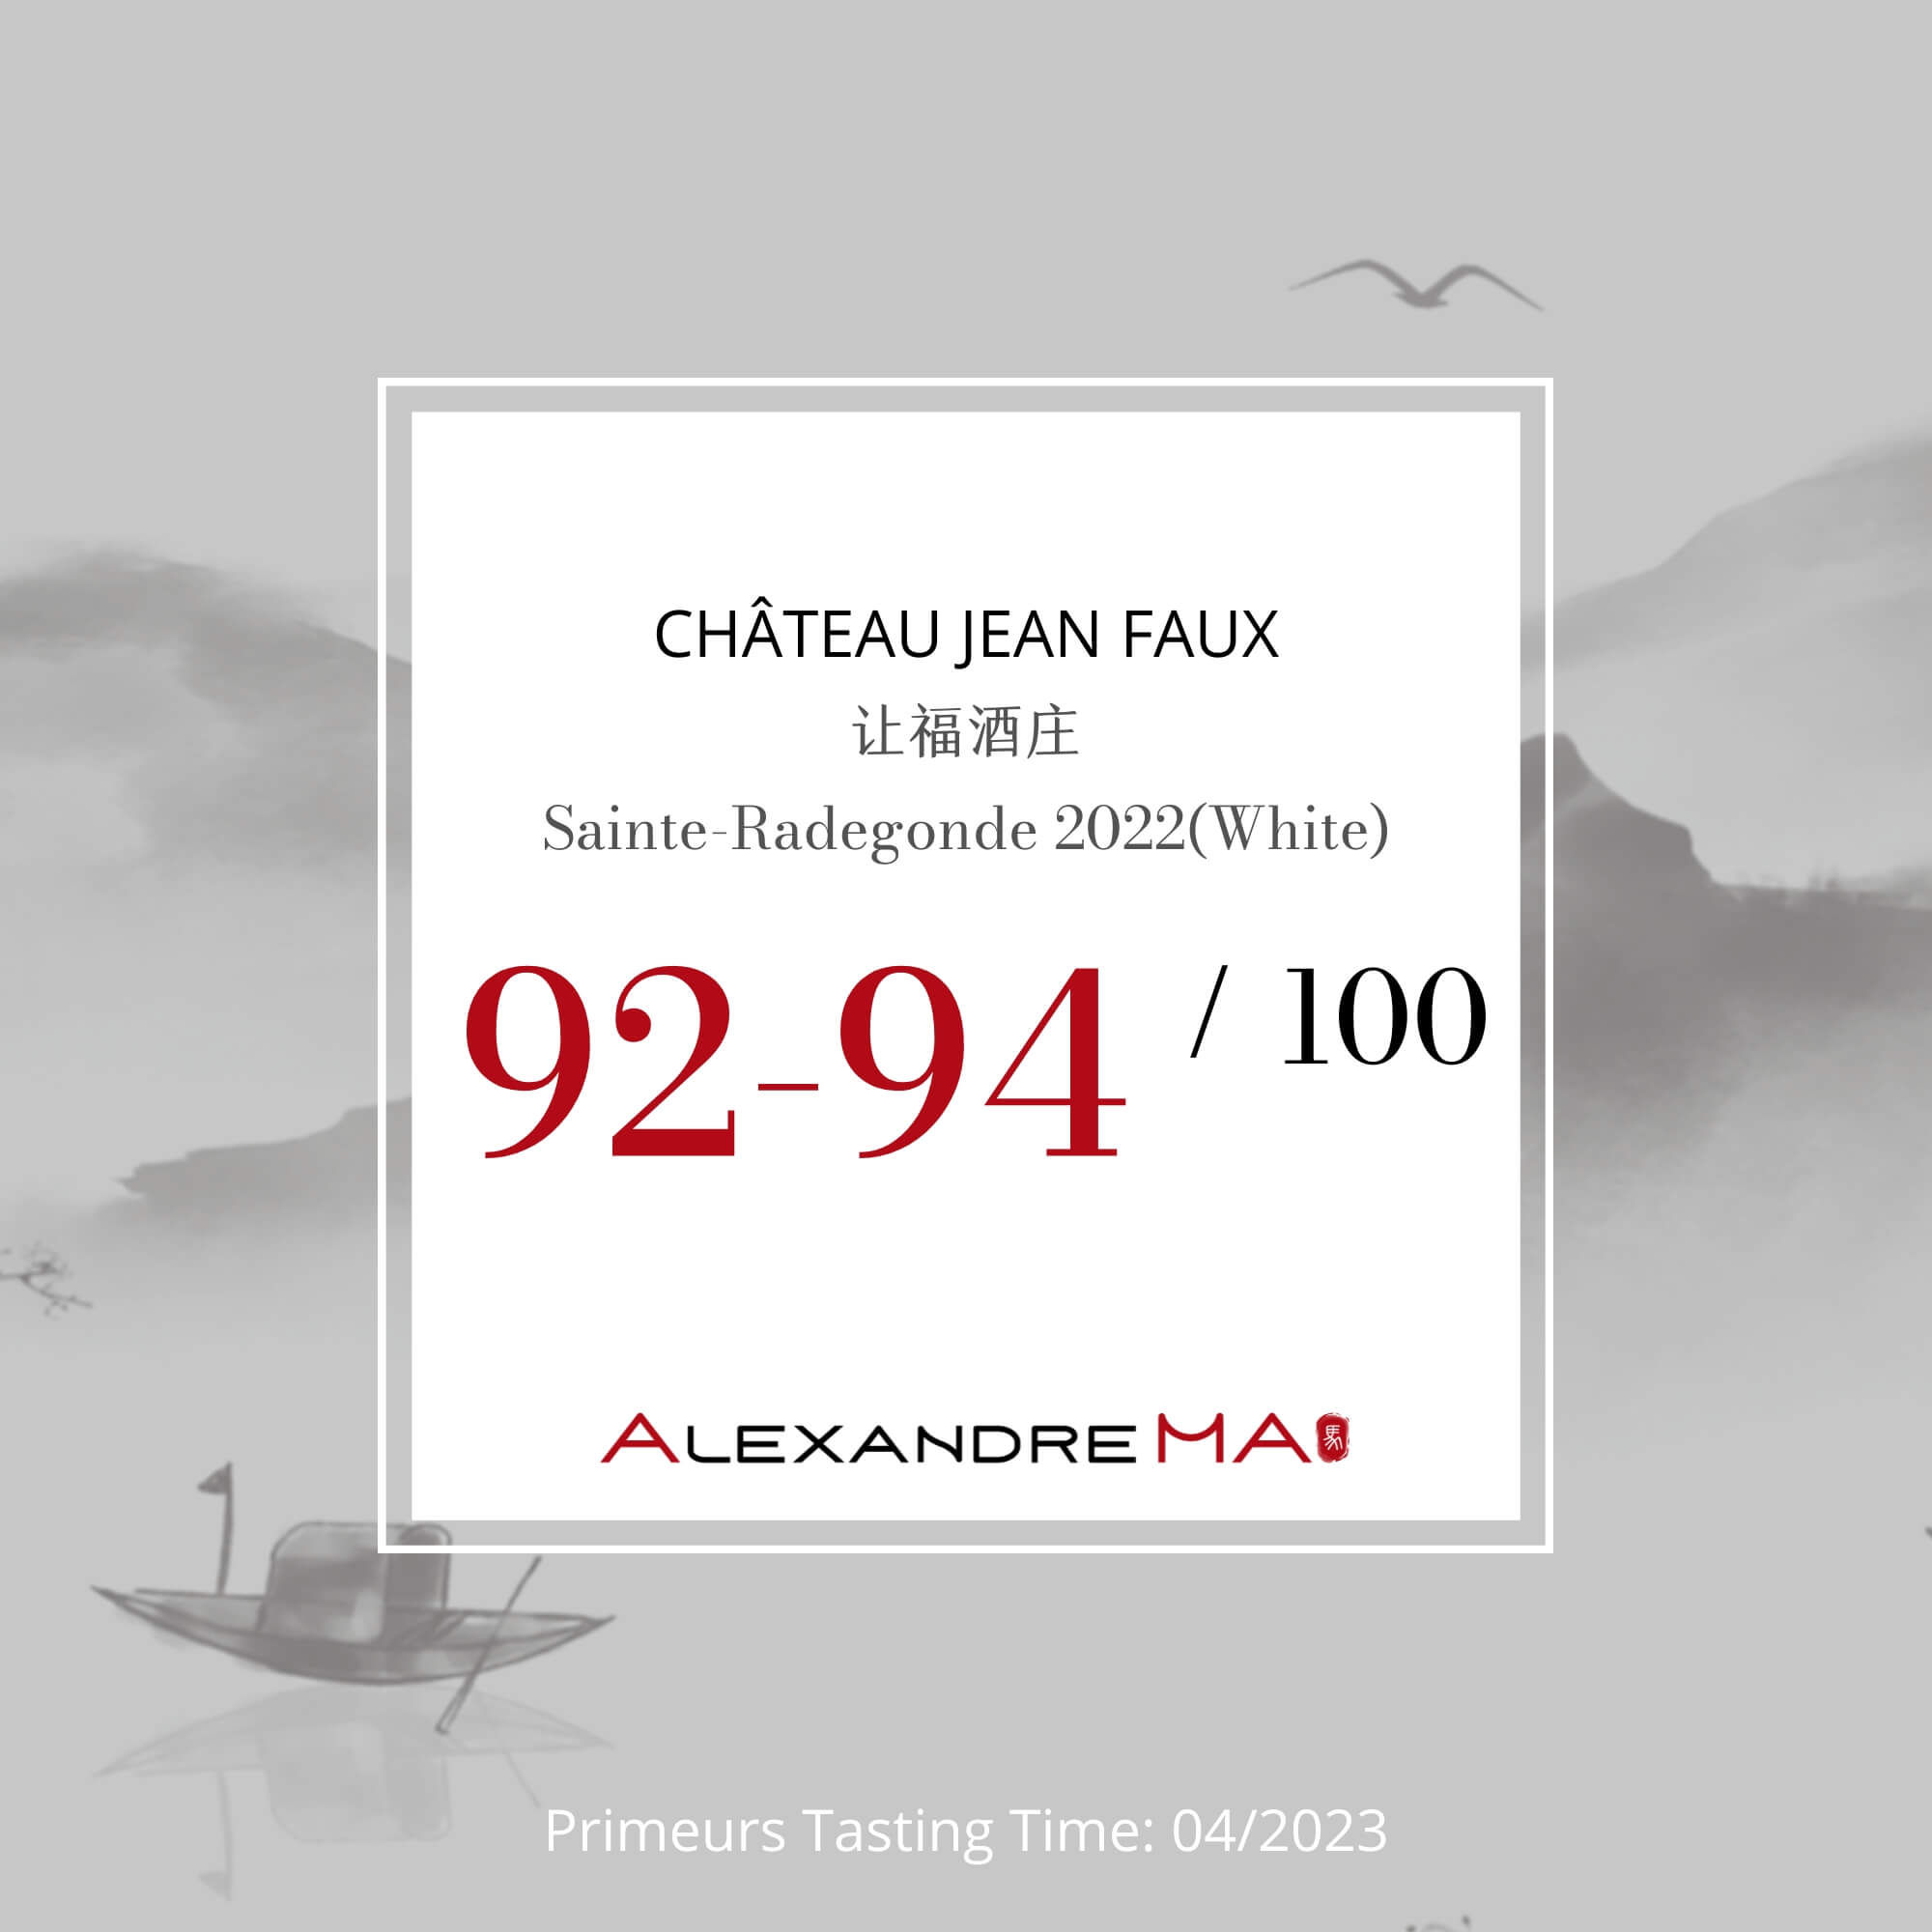 Château Jean Faux-Sainte-Radegonde 2022-White Primeurs - Alexandre MA